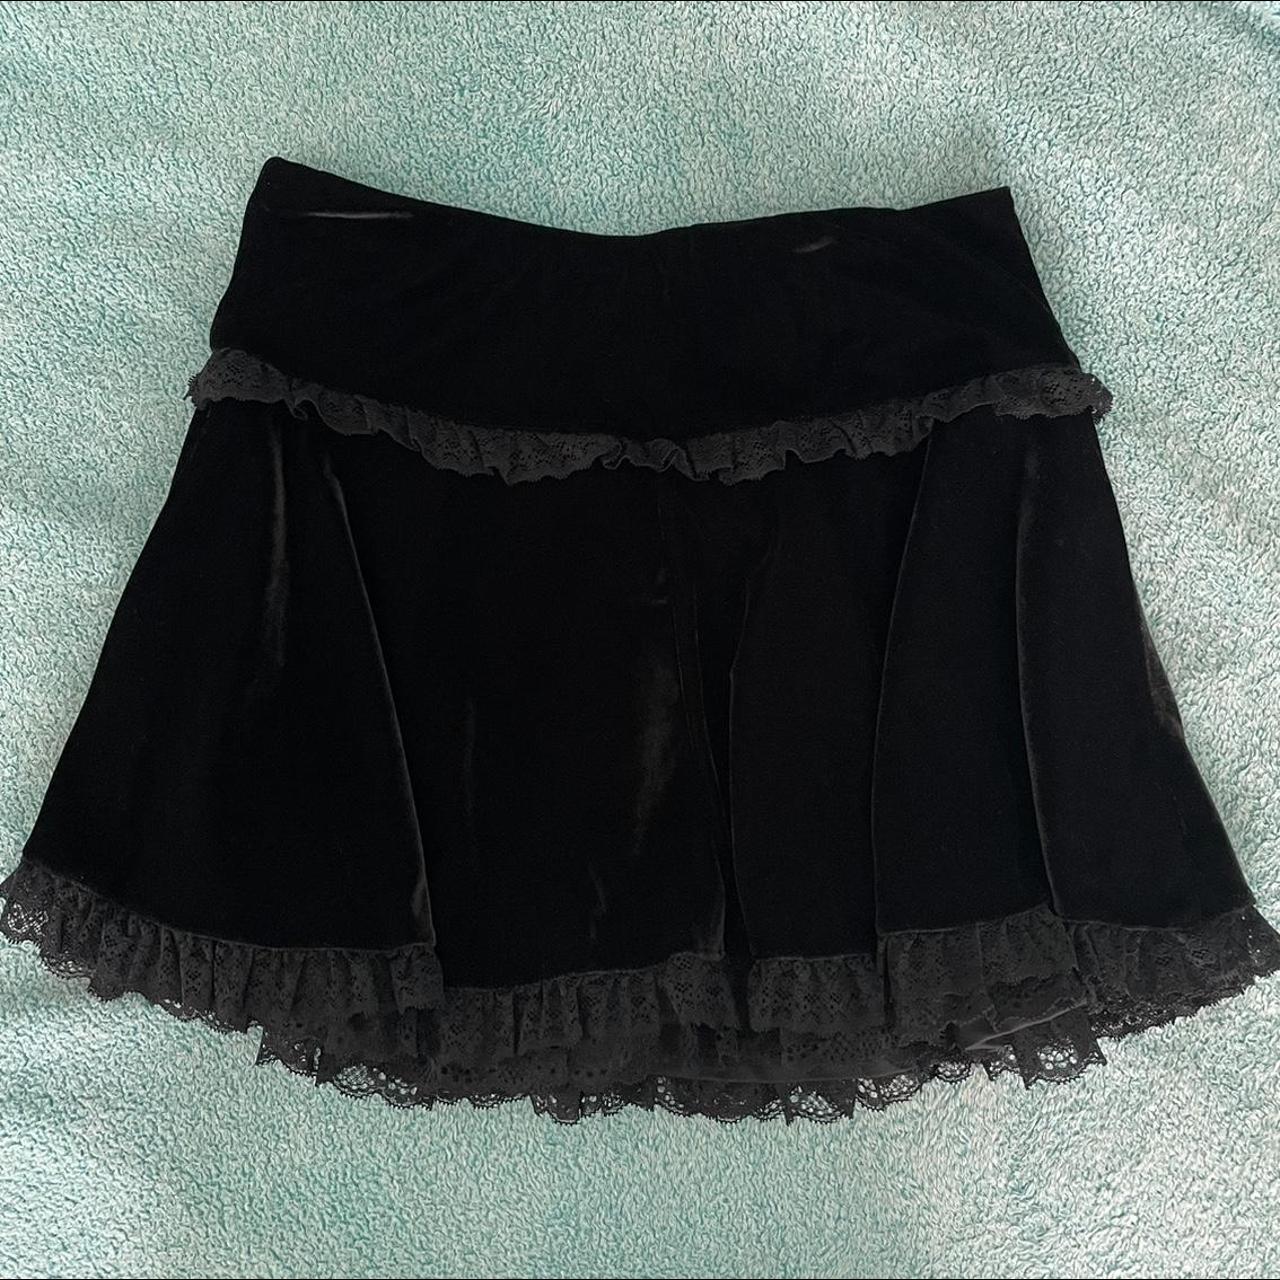 killstar mitzy velvet mini skirt—so pretty and... - Depop